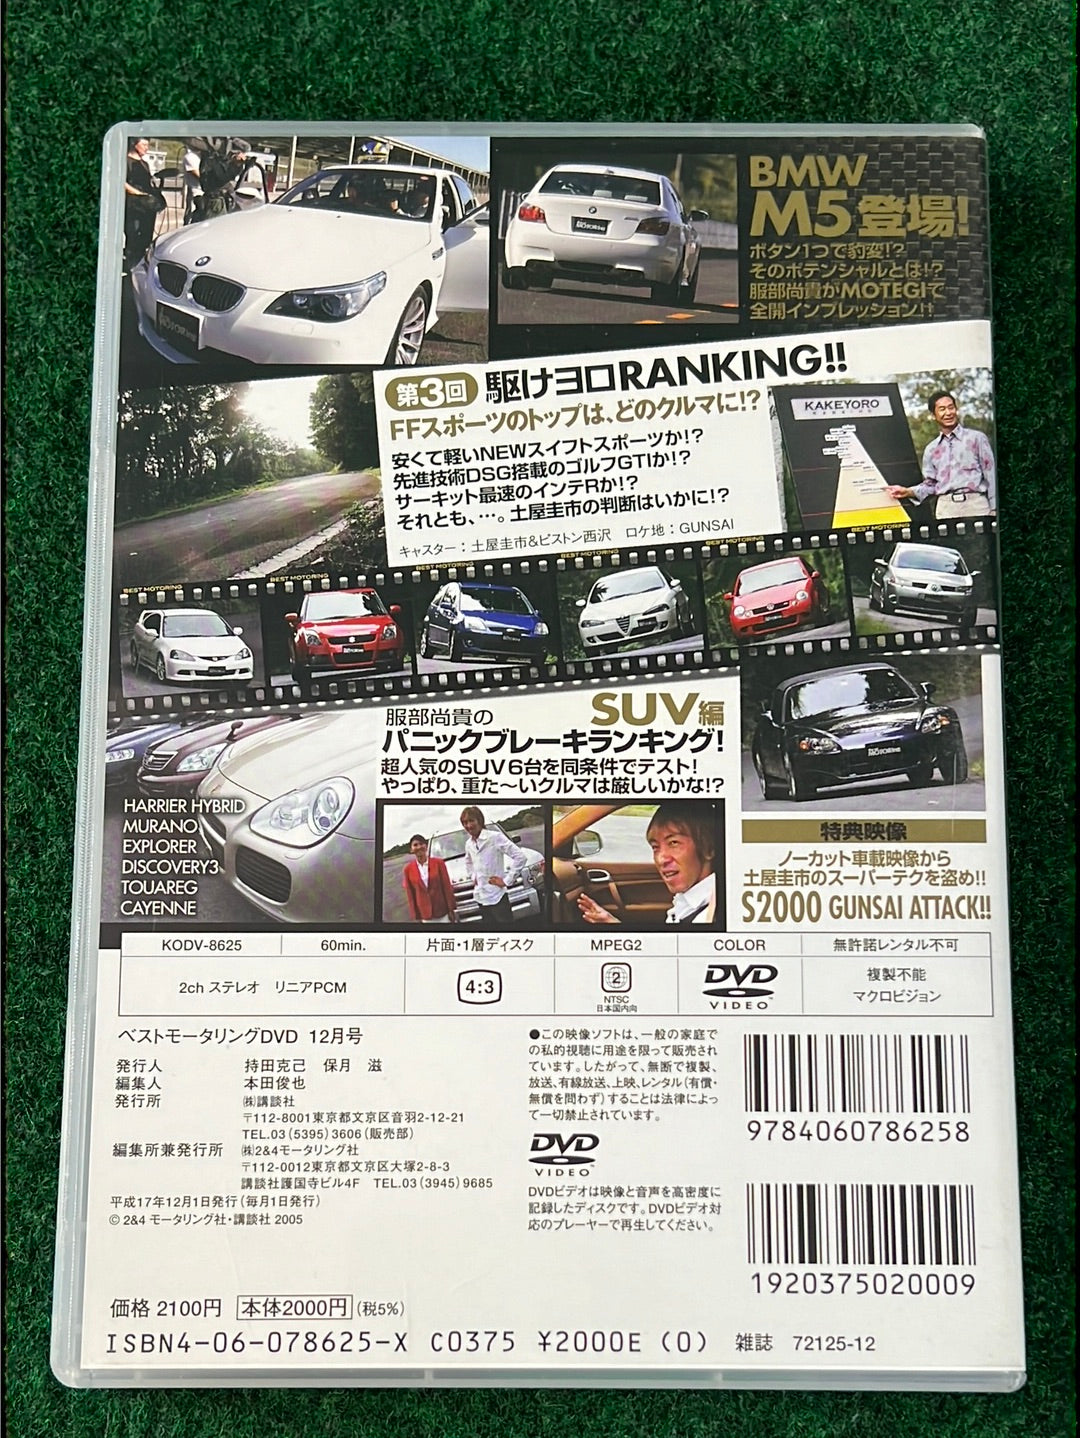 Best Motoring DVD - December 2005